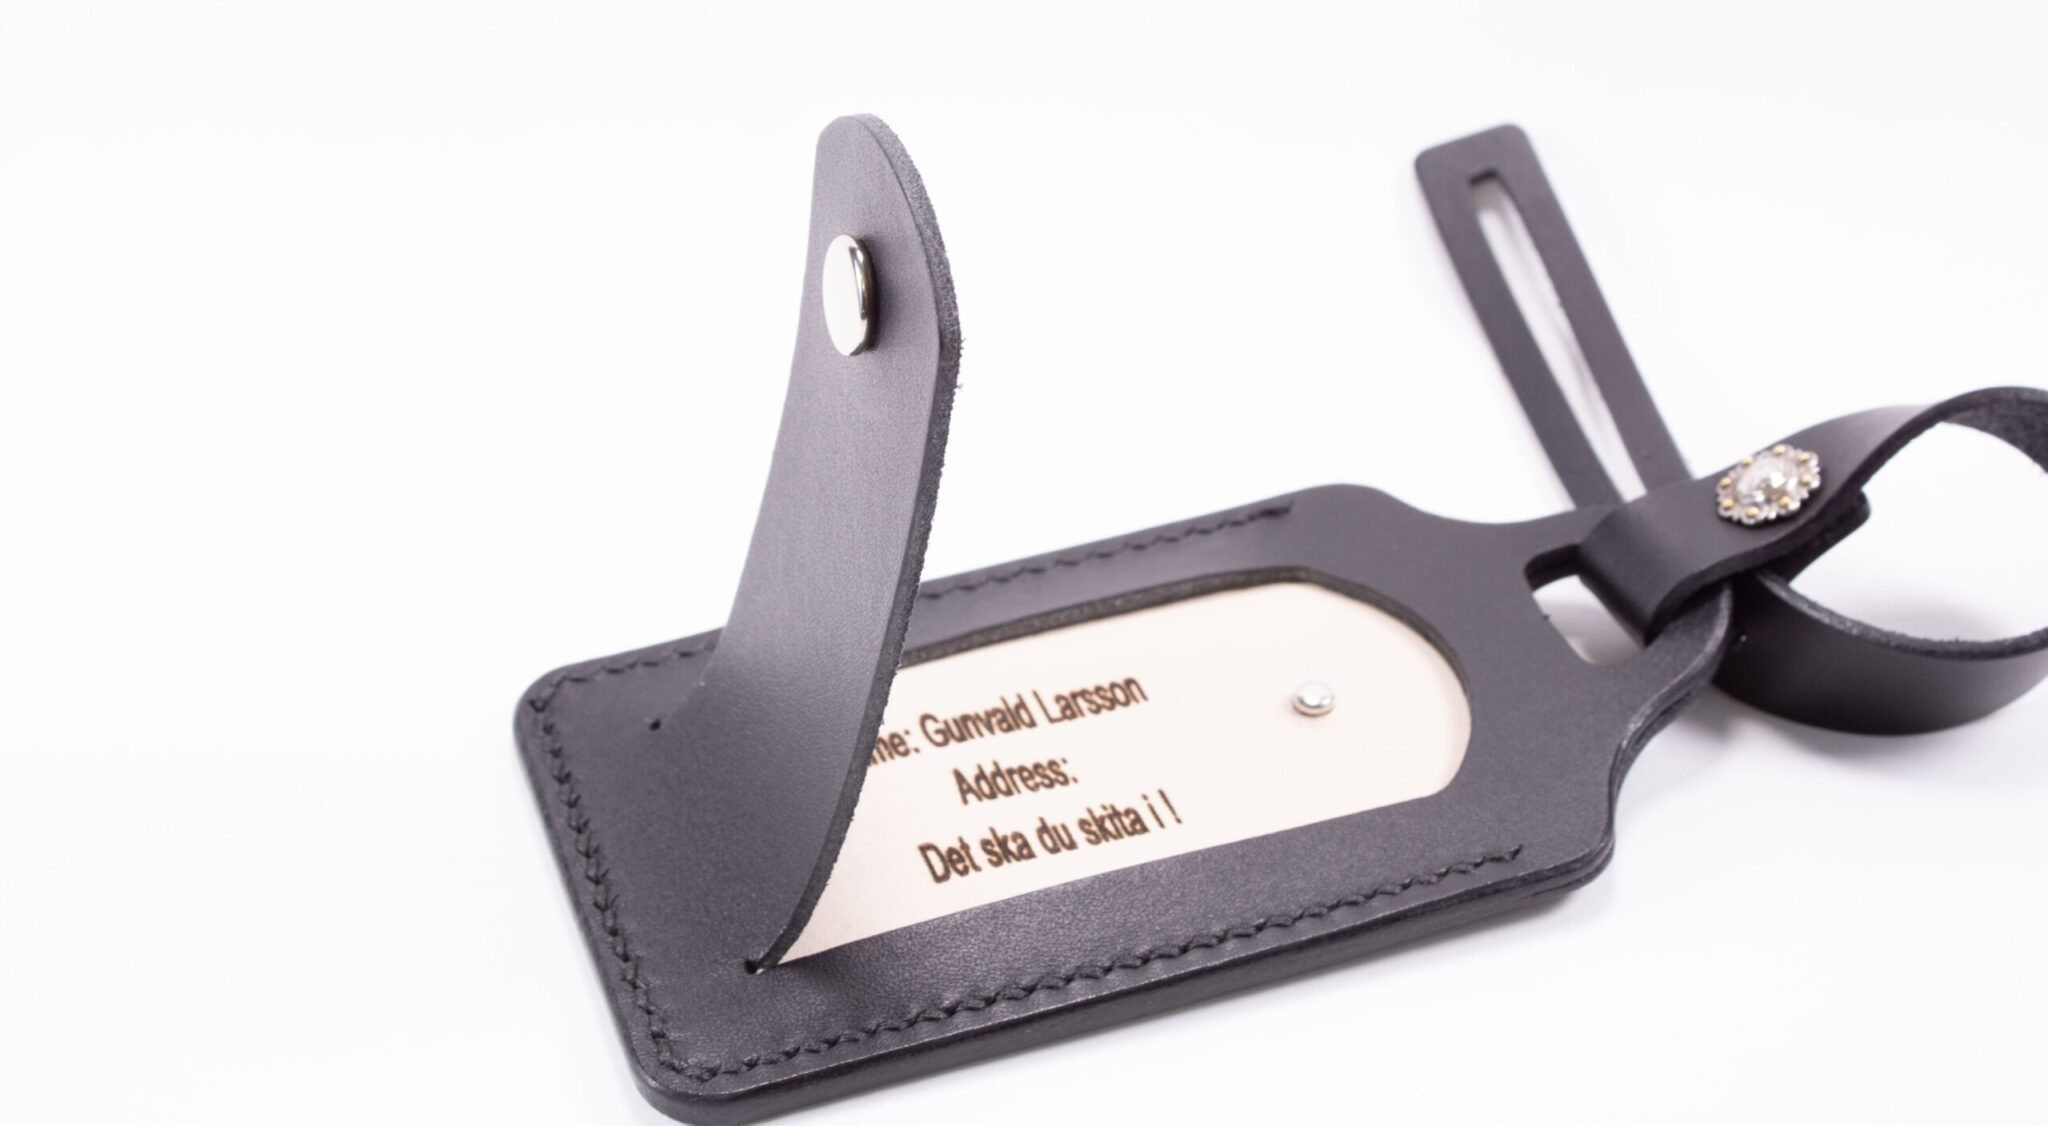 Product image of FredFloris leather luggage tag